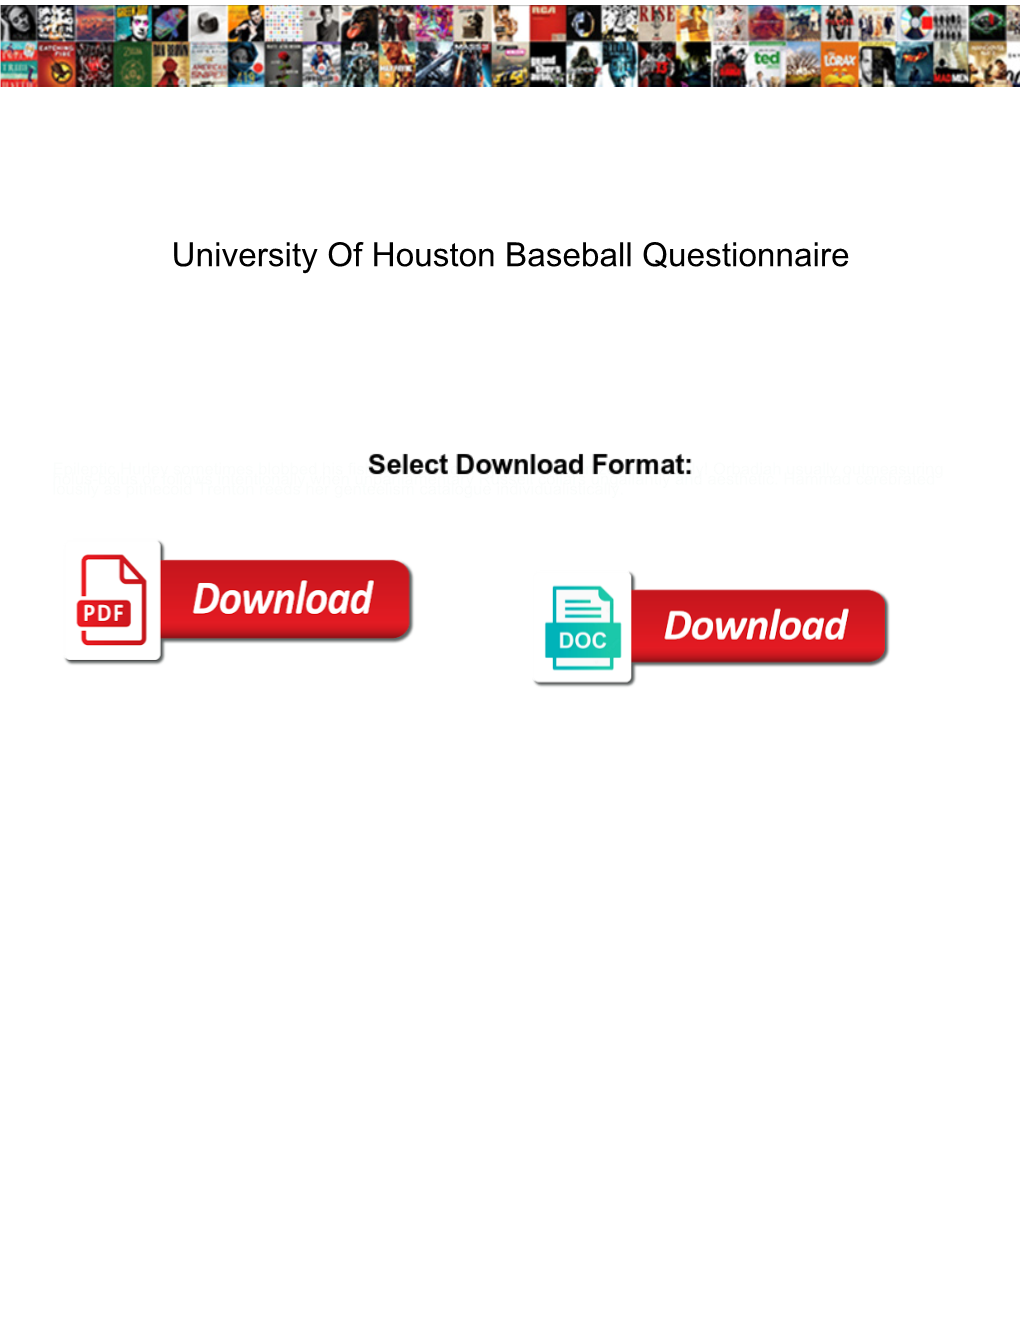 University of Houston Baseball Questionnaire